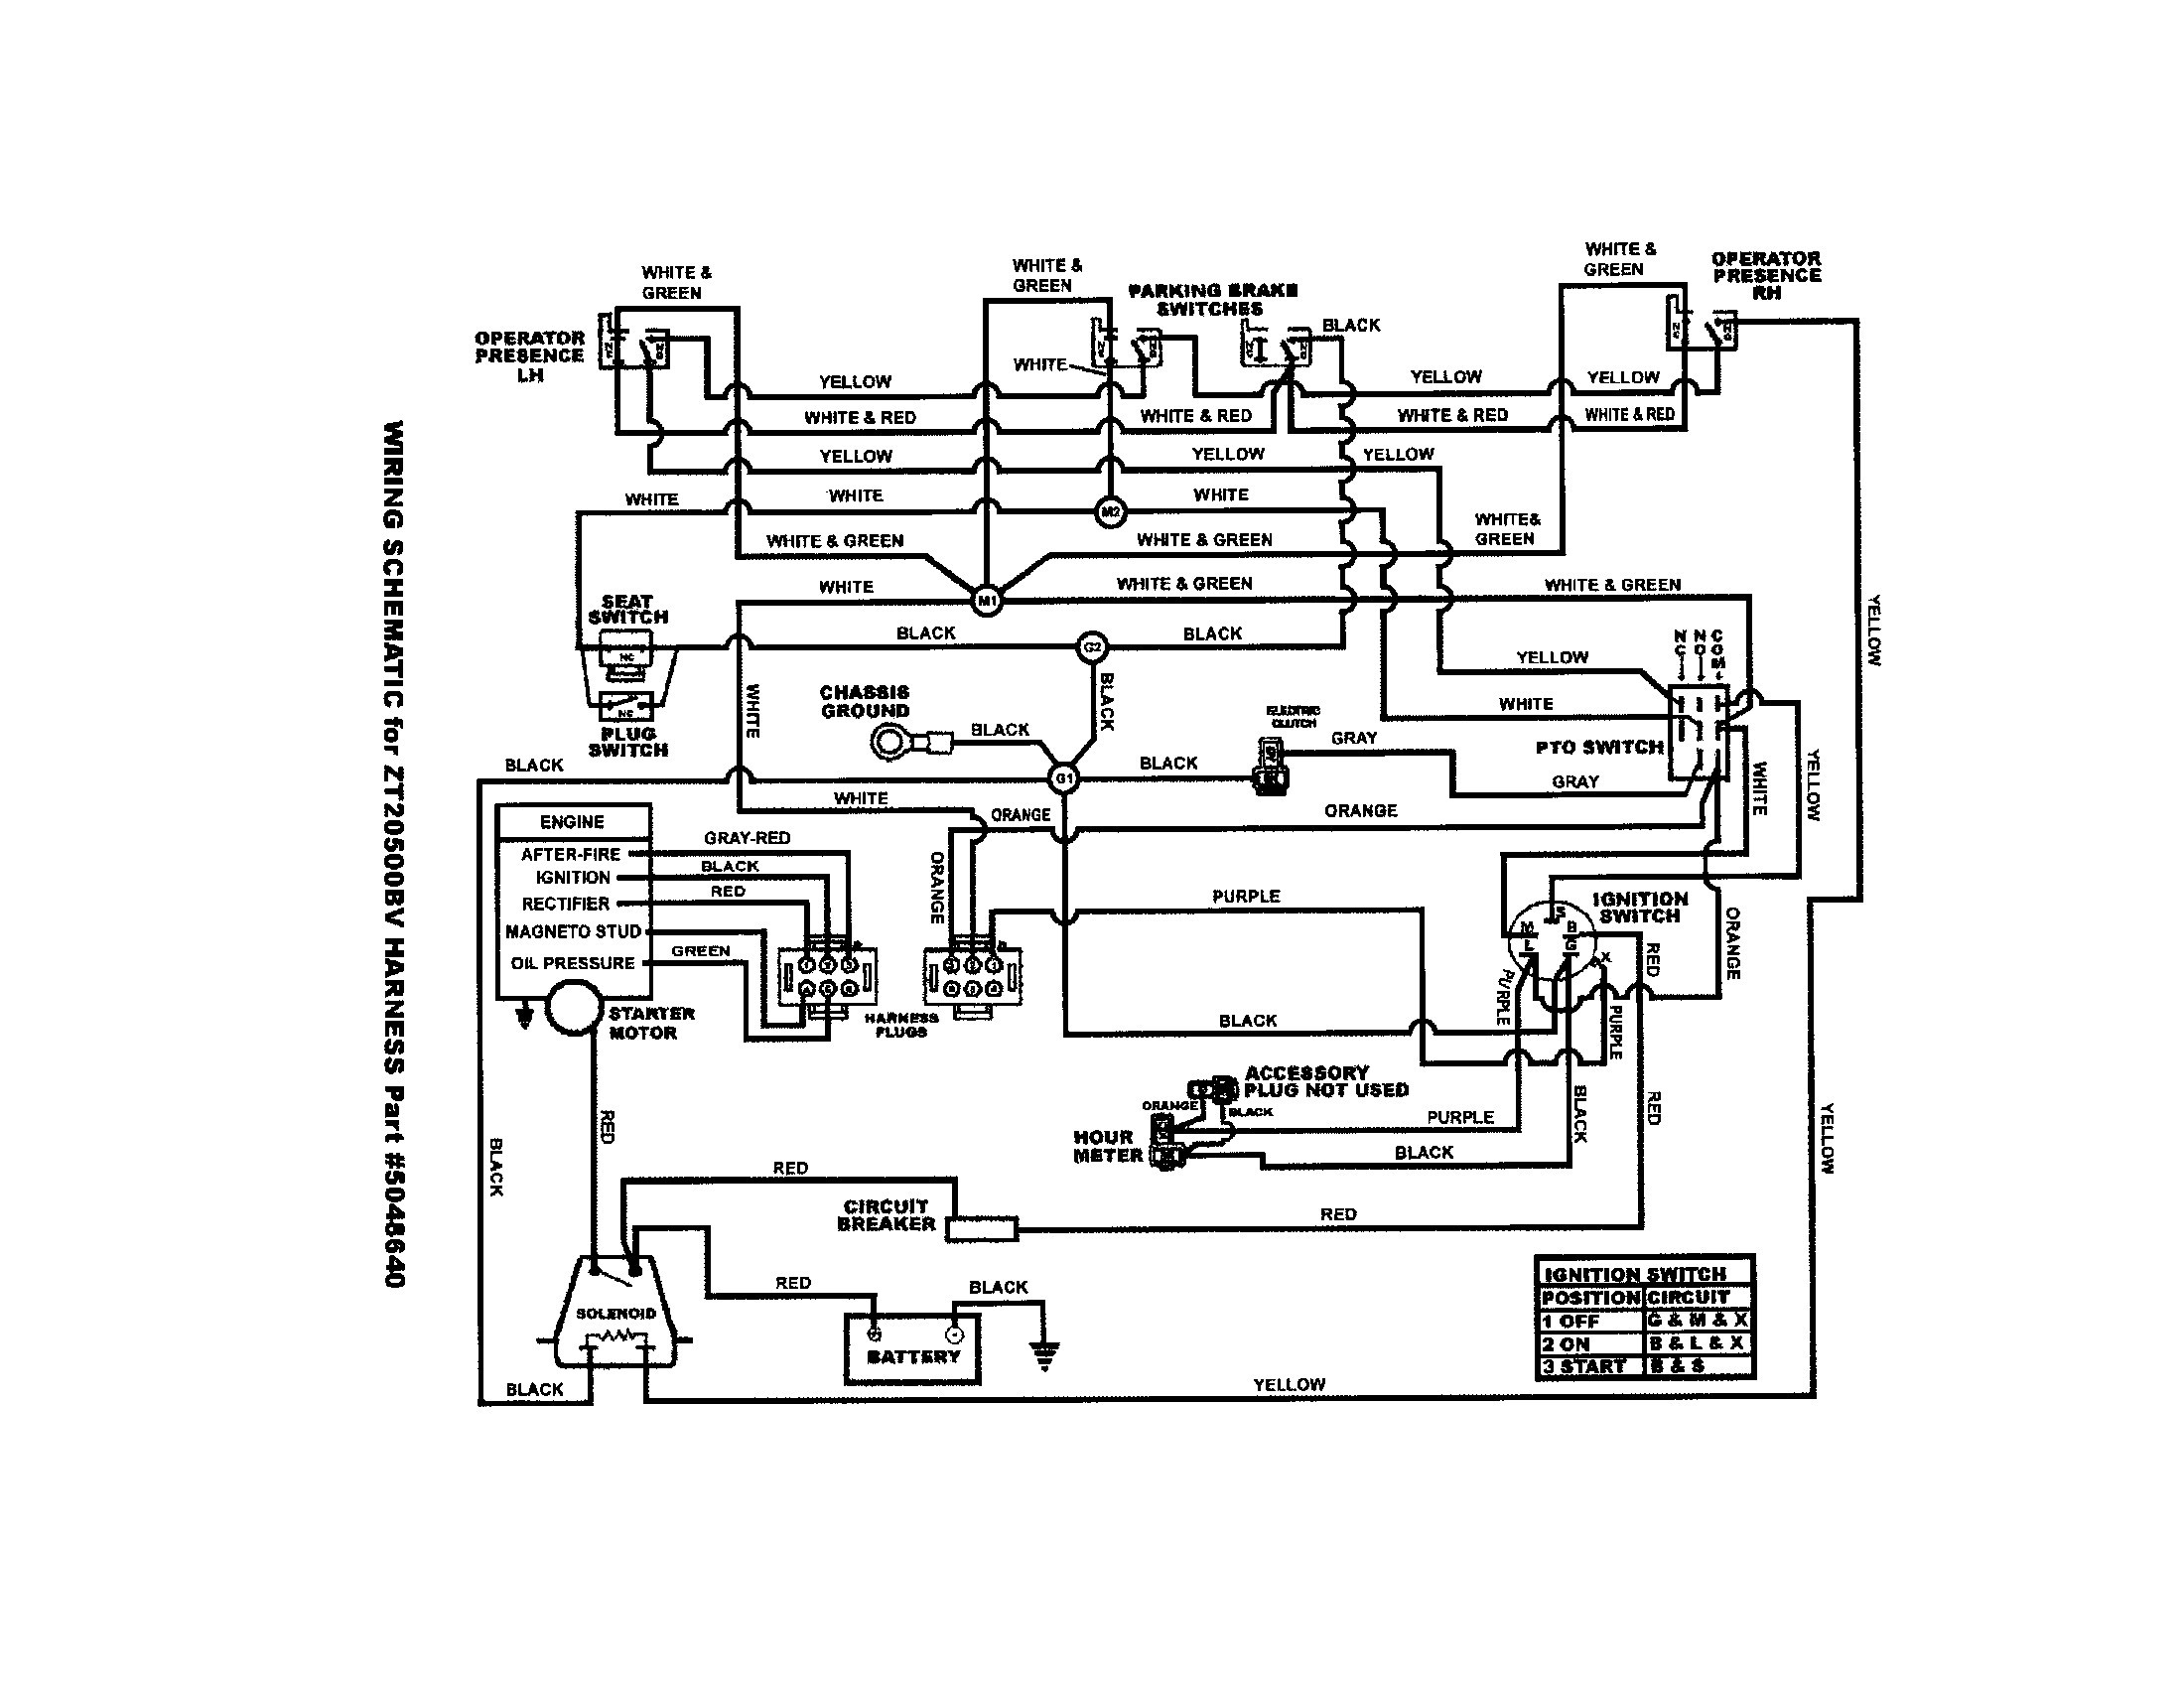 Kohler Engine Ignition Switch Wiring | Wiring Library - Kohler Command Wiring Diagram